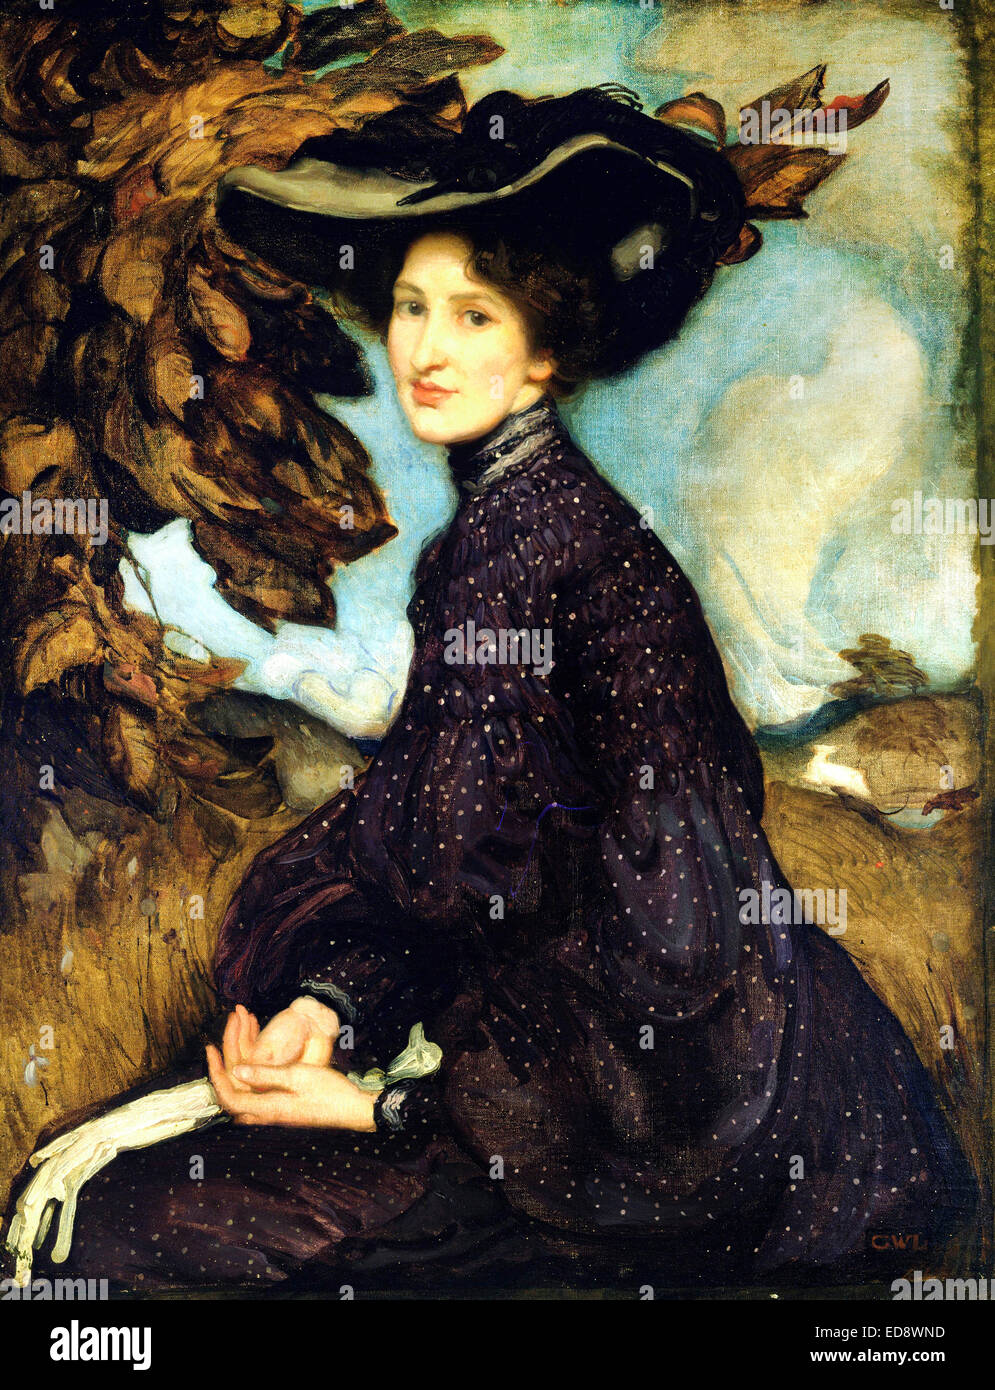 George Washington Lambert - Miss Thea Proctor 1903 Öl auf Leinwand. Art Gallery of New South Wales, Sydney, Australien. Stockfoto